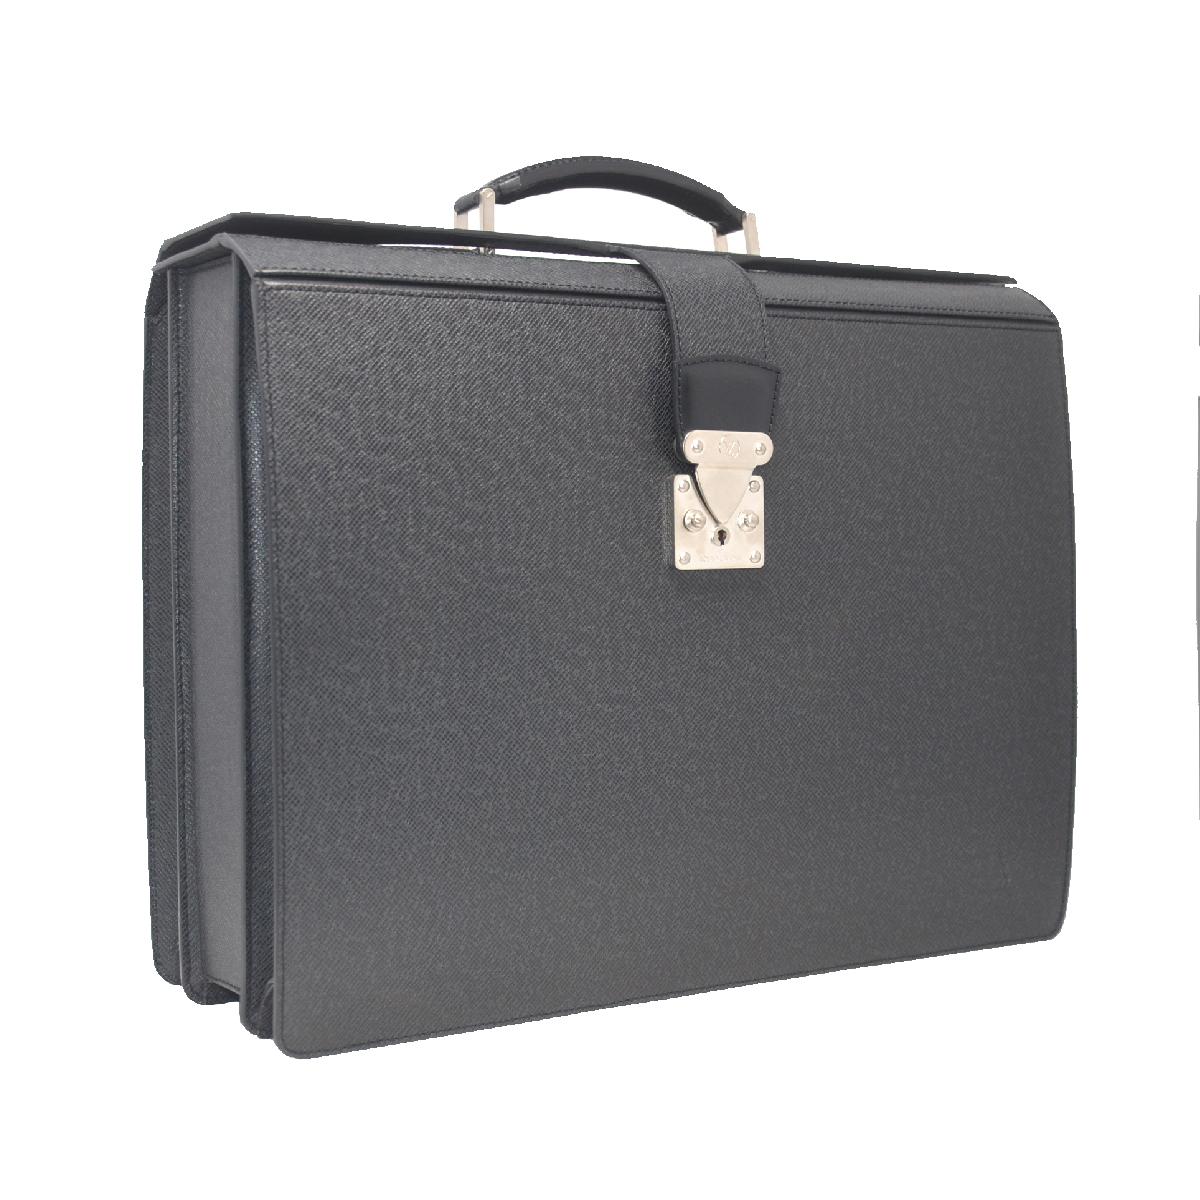 Company-Louis Vuitton 
Model-Taiga Leather Pilots Briefcase 
Color-Black 
Date Code-RI0063
Material-Taiga Leather
Measurements-16.5